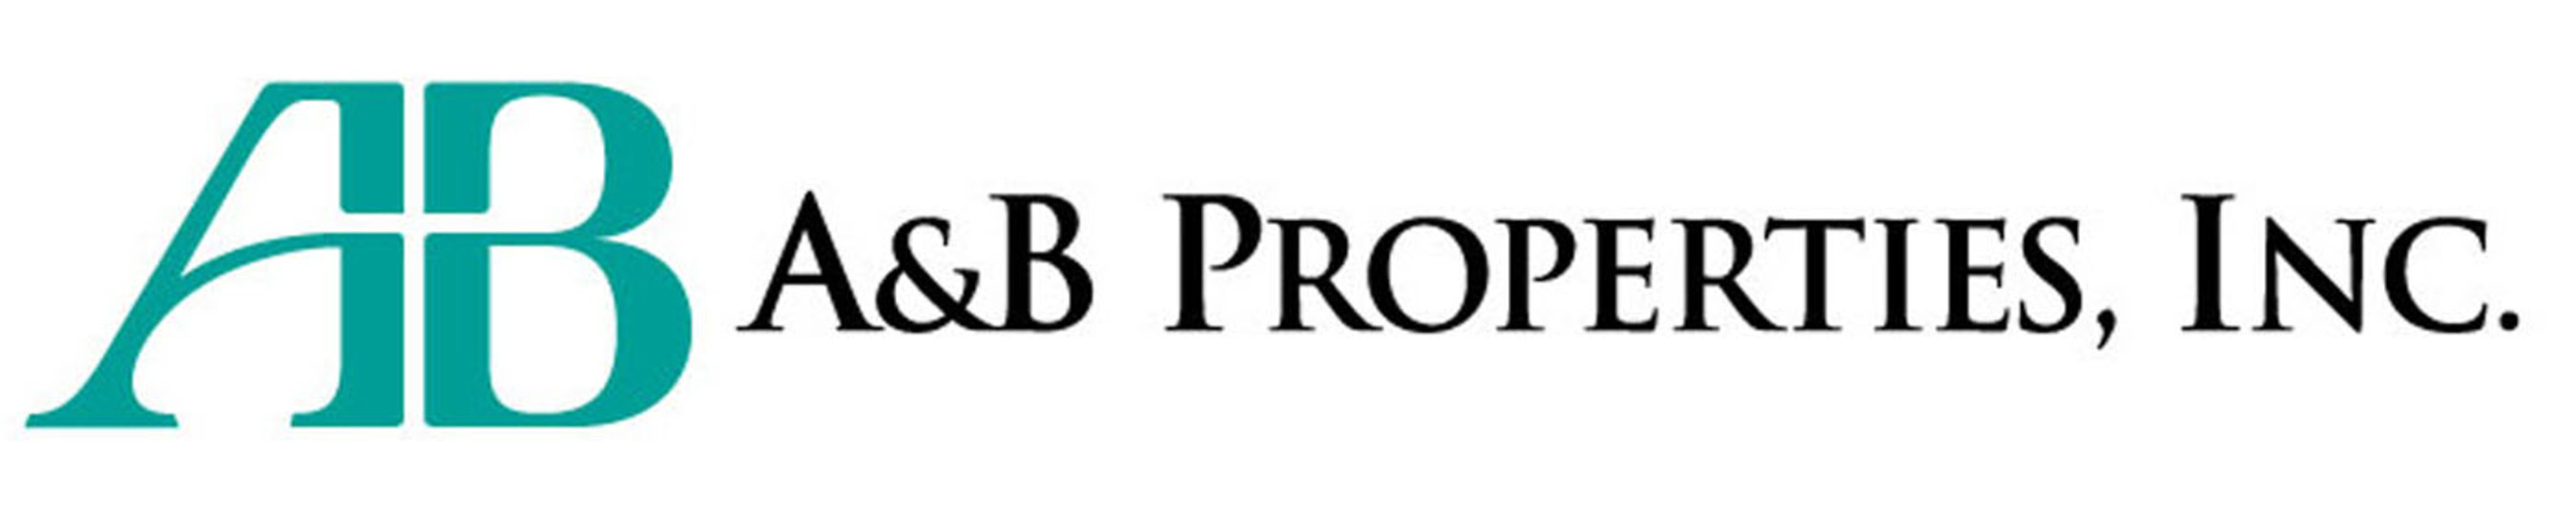 A&B Properties, Inc. Logo.